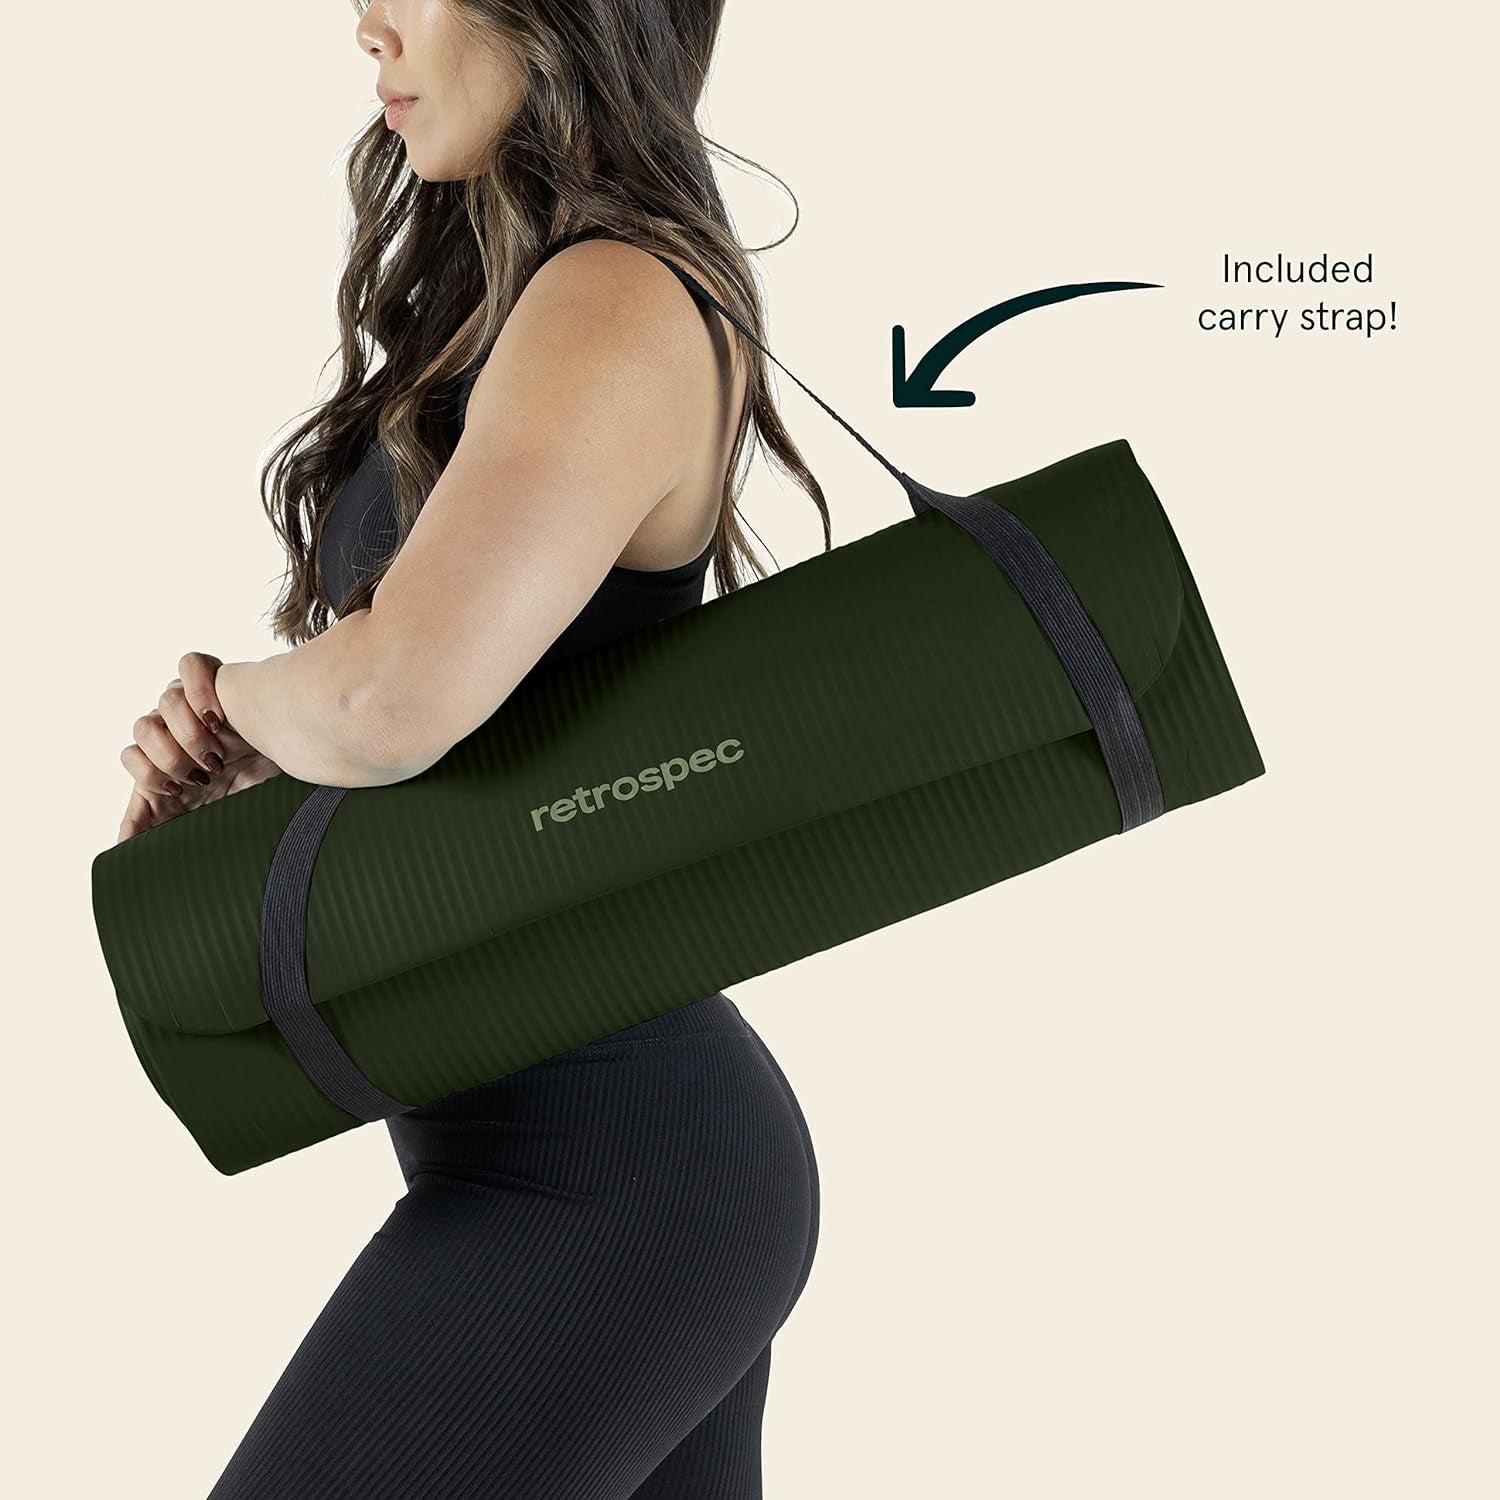 Solana Yoga Mat 1/2 Thick W/Nylon Strap for Men & Women - Non